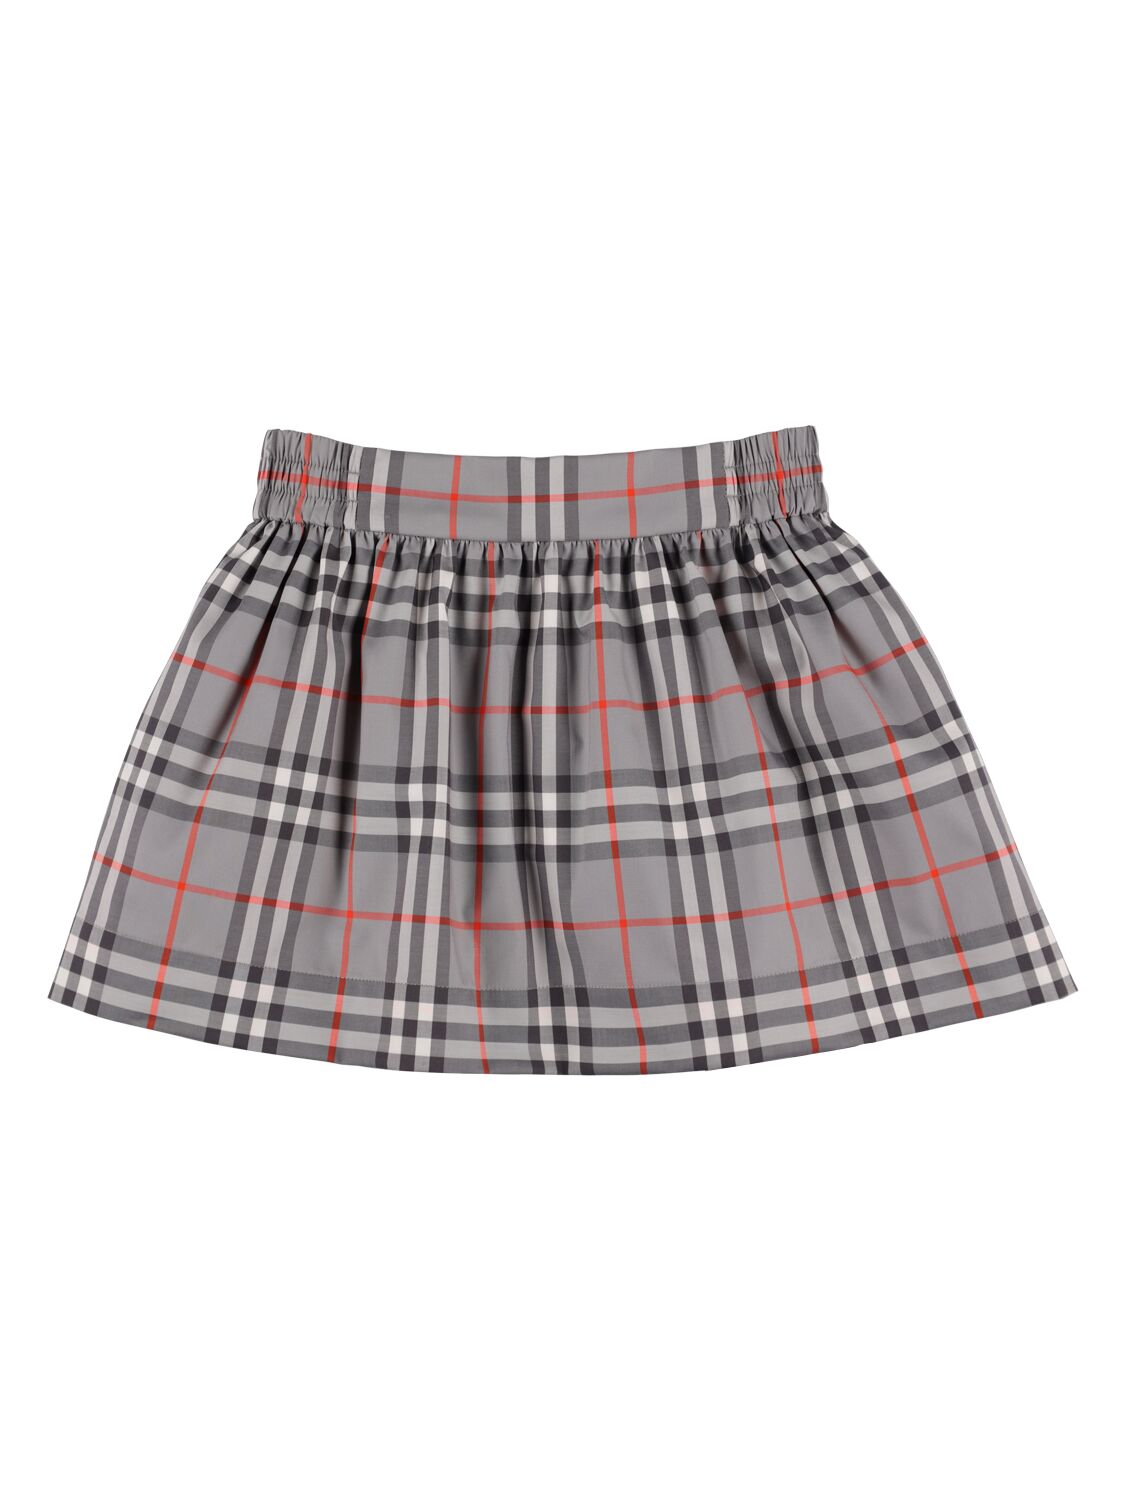 Burberry Kids' Check Print Cotton Blend Skirt